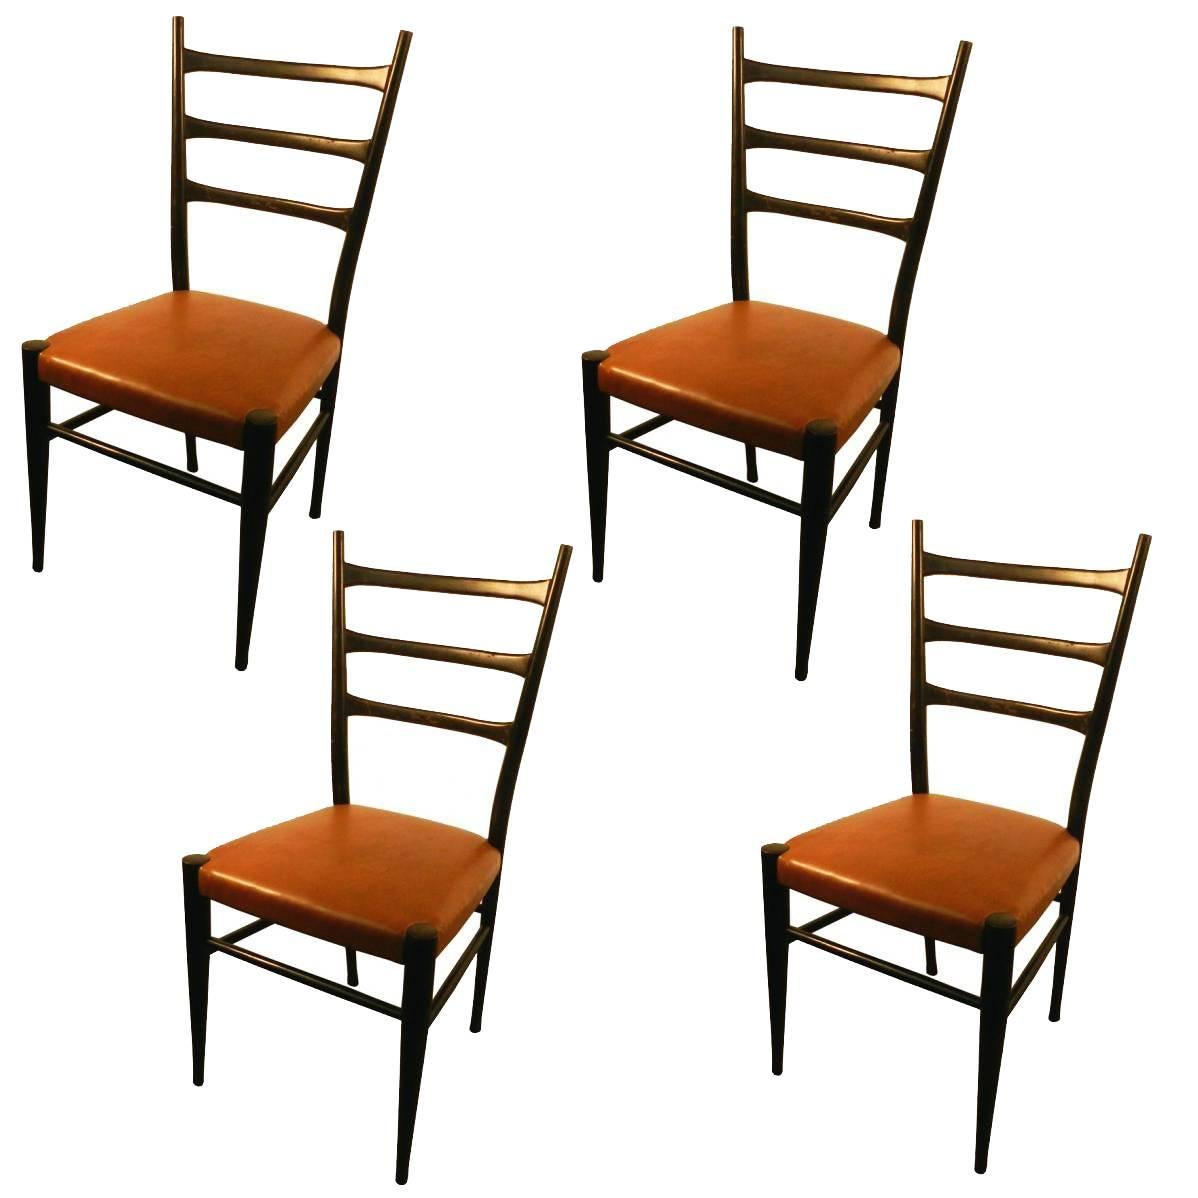 Four Italian Style Chairs, circa 1950-1960